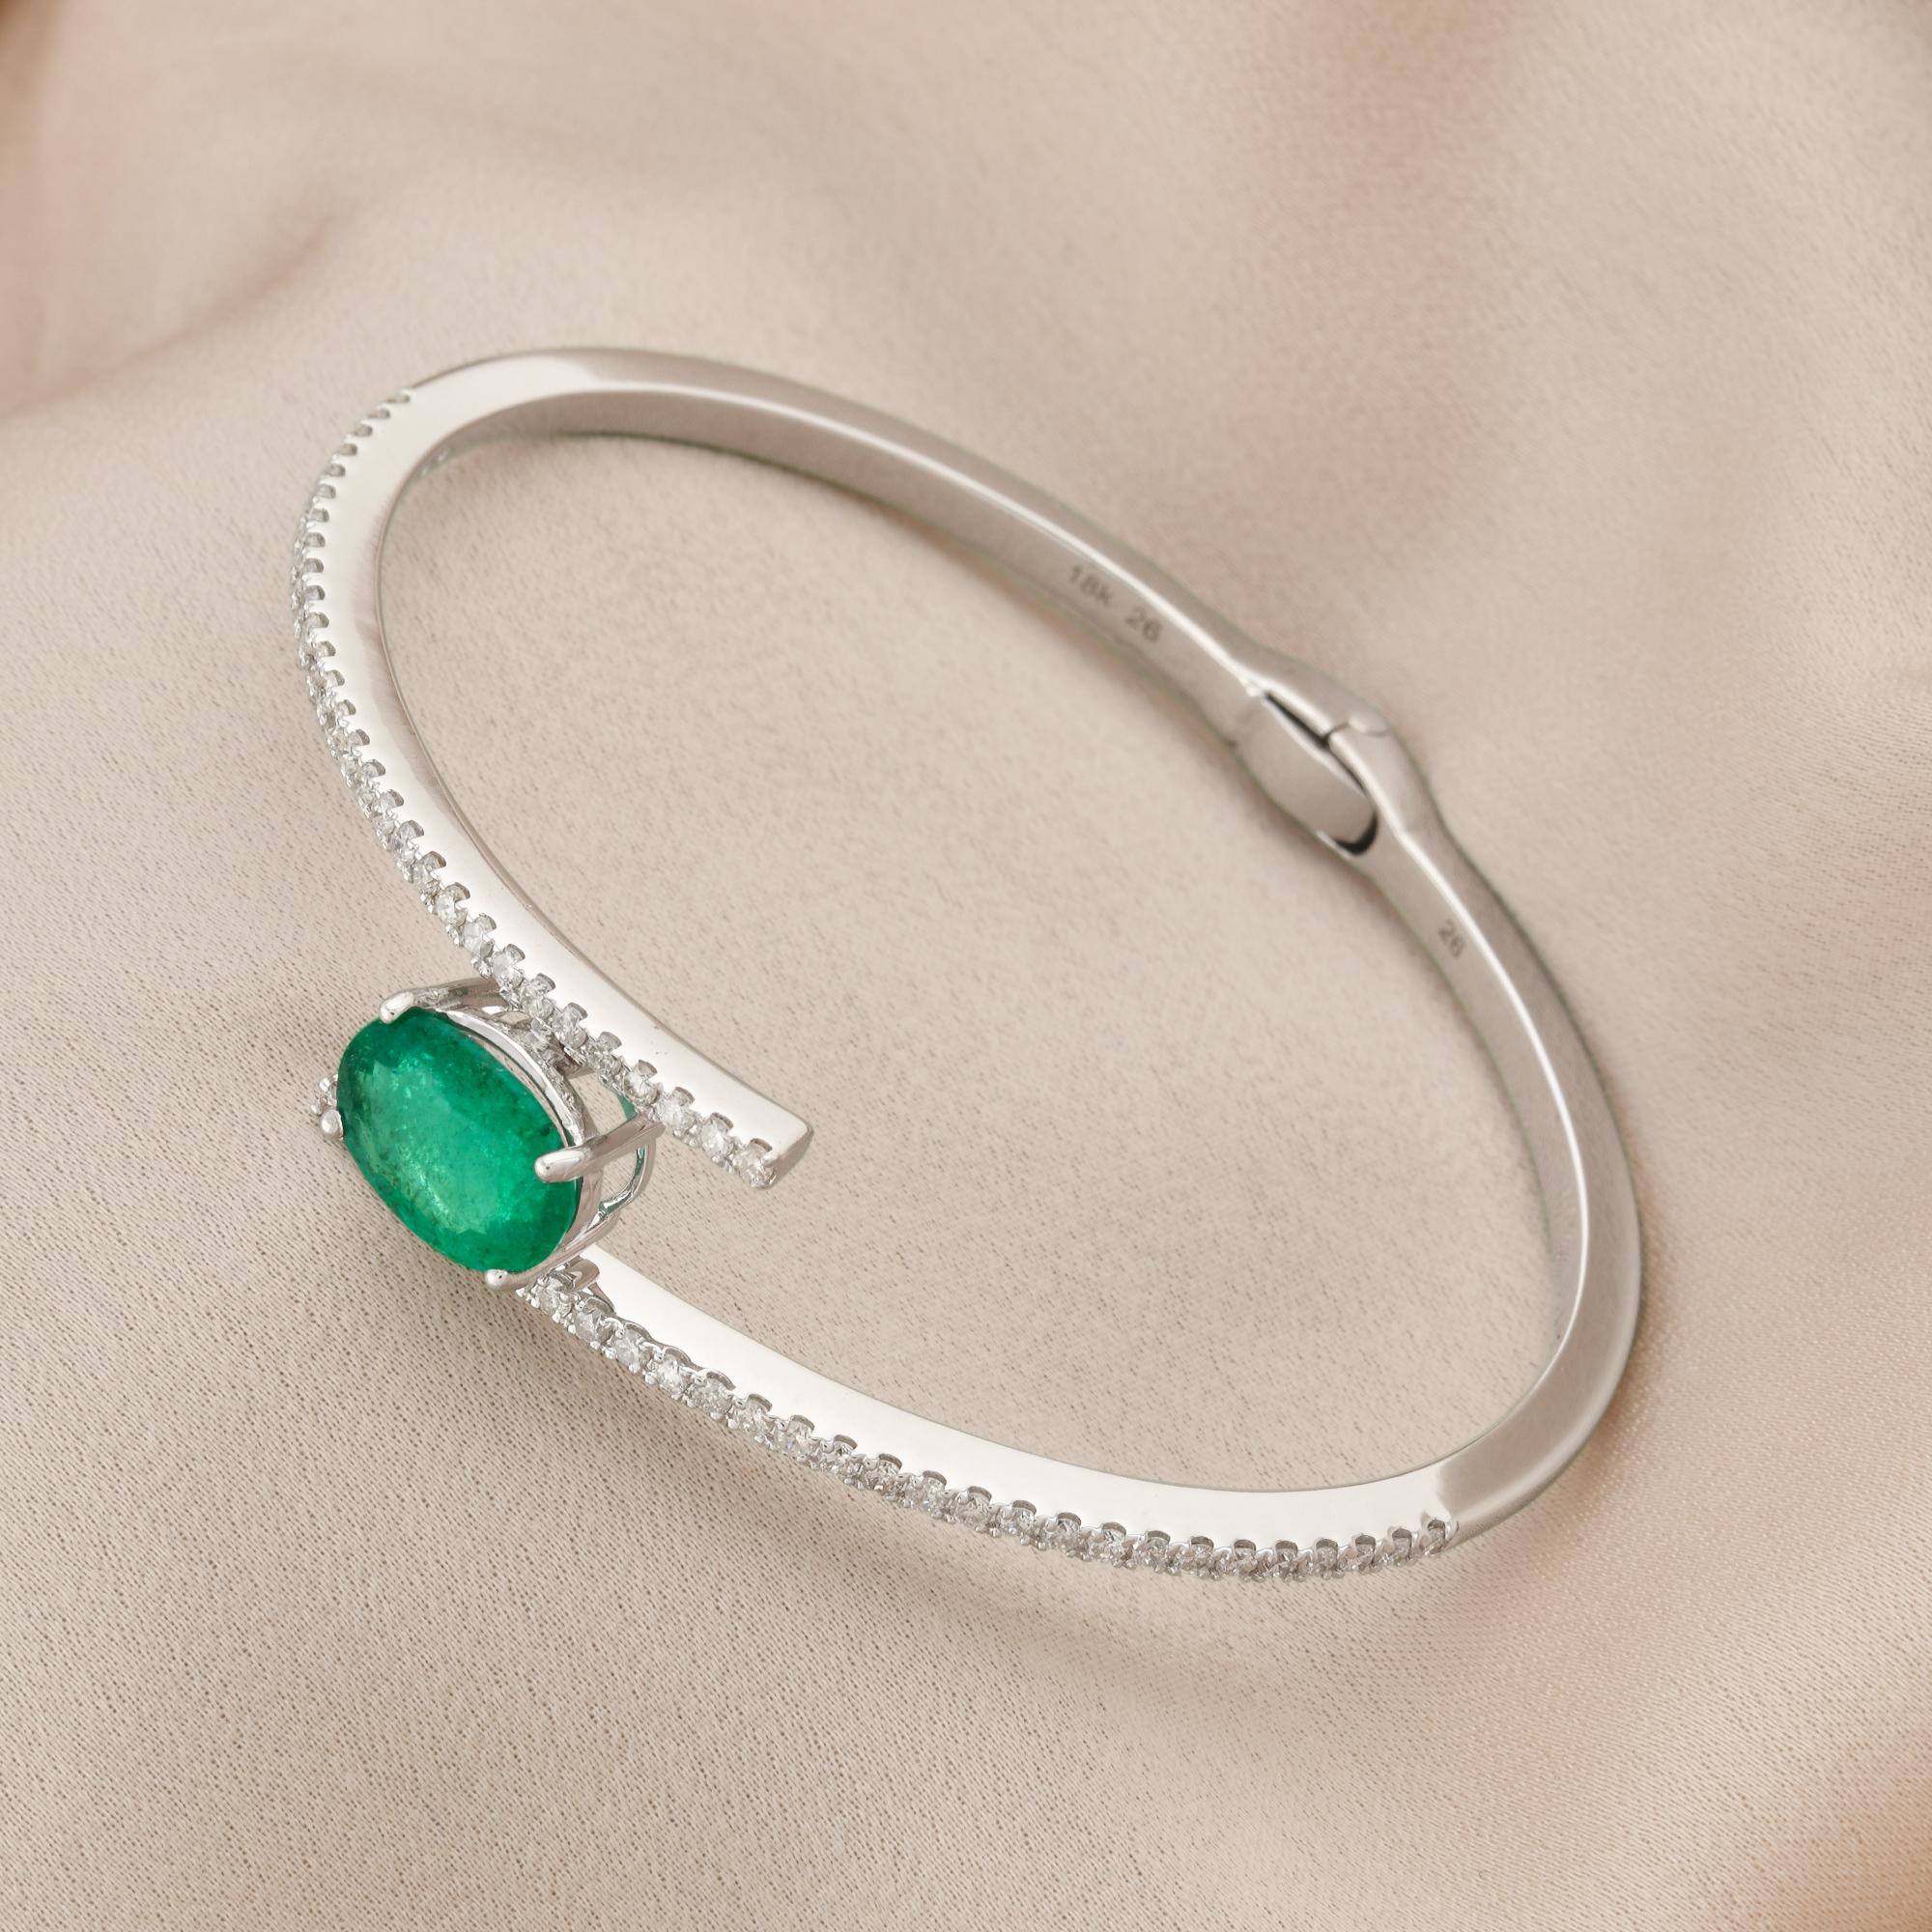 Oval Cut Oval Emerald Gemstone Bangle Bracelet Pave Diamond 18k White Gold Fine Jewelry For Sale